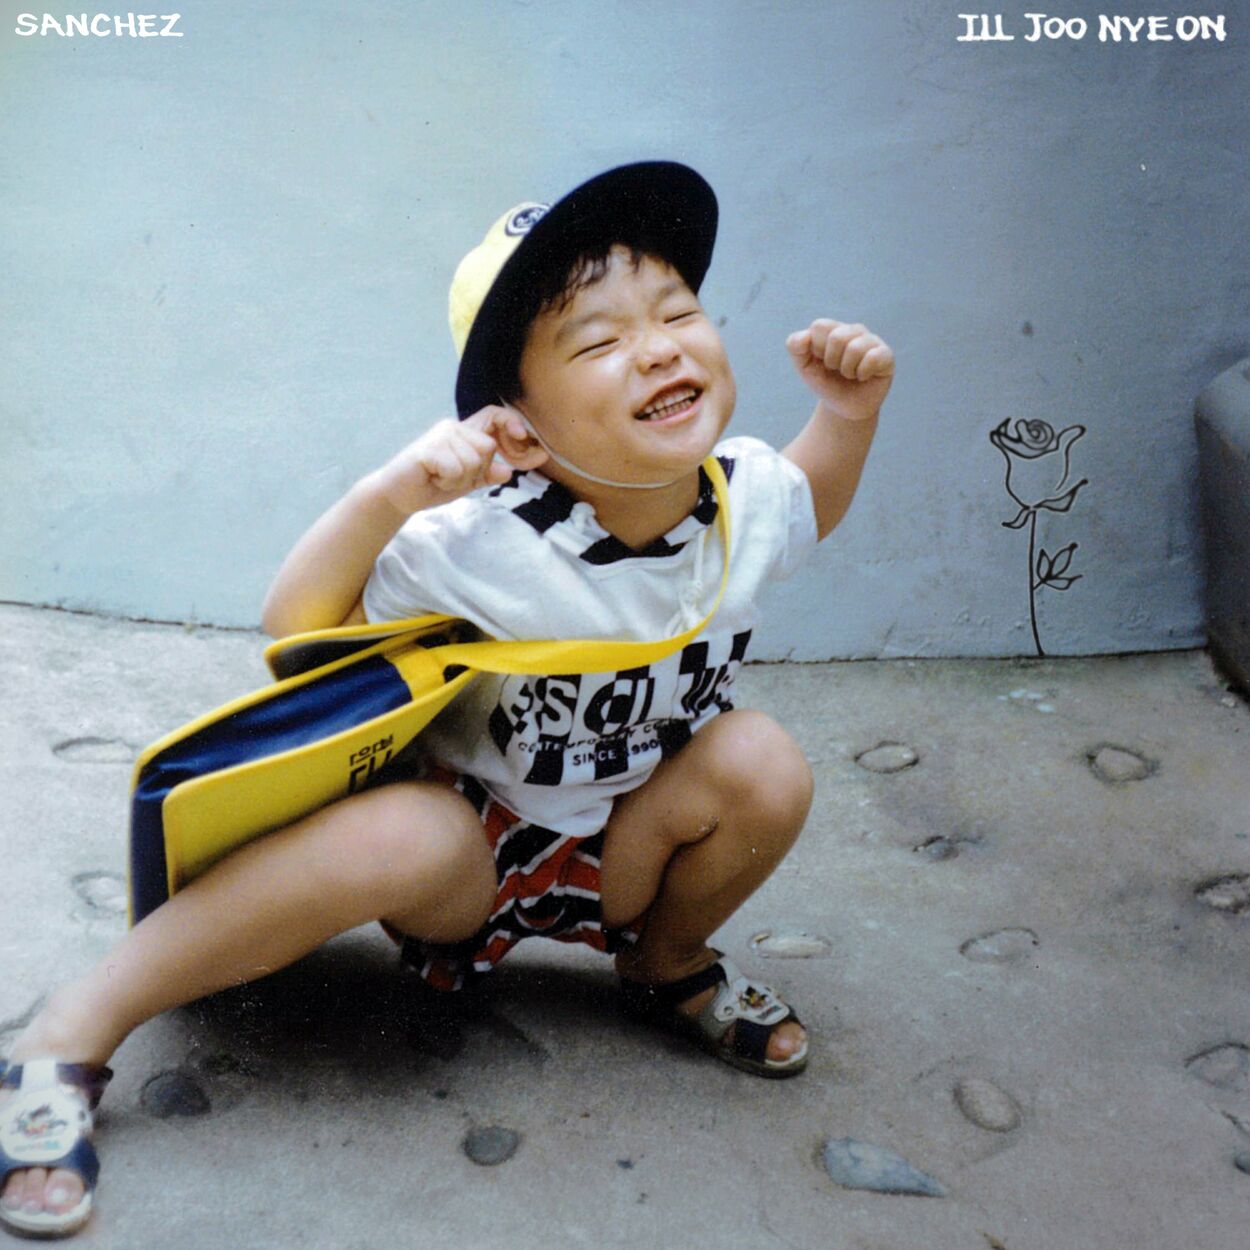 Sanchez – Ill Joo Nyeon – Single